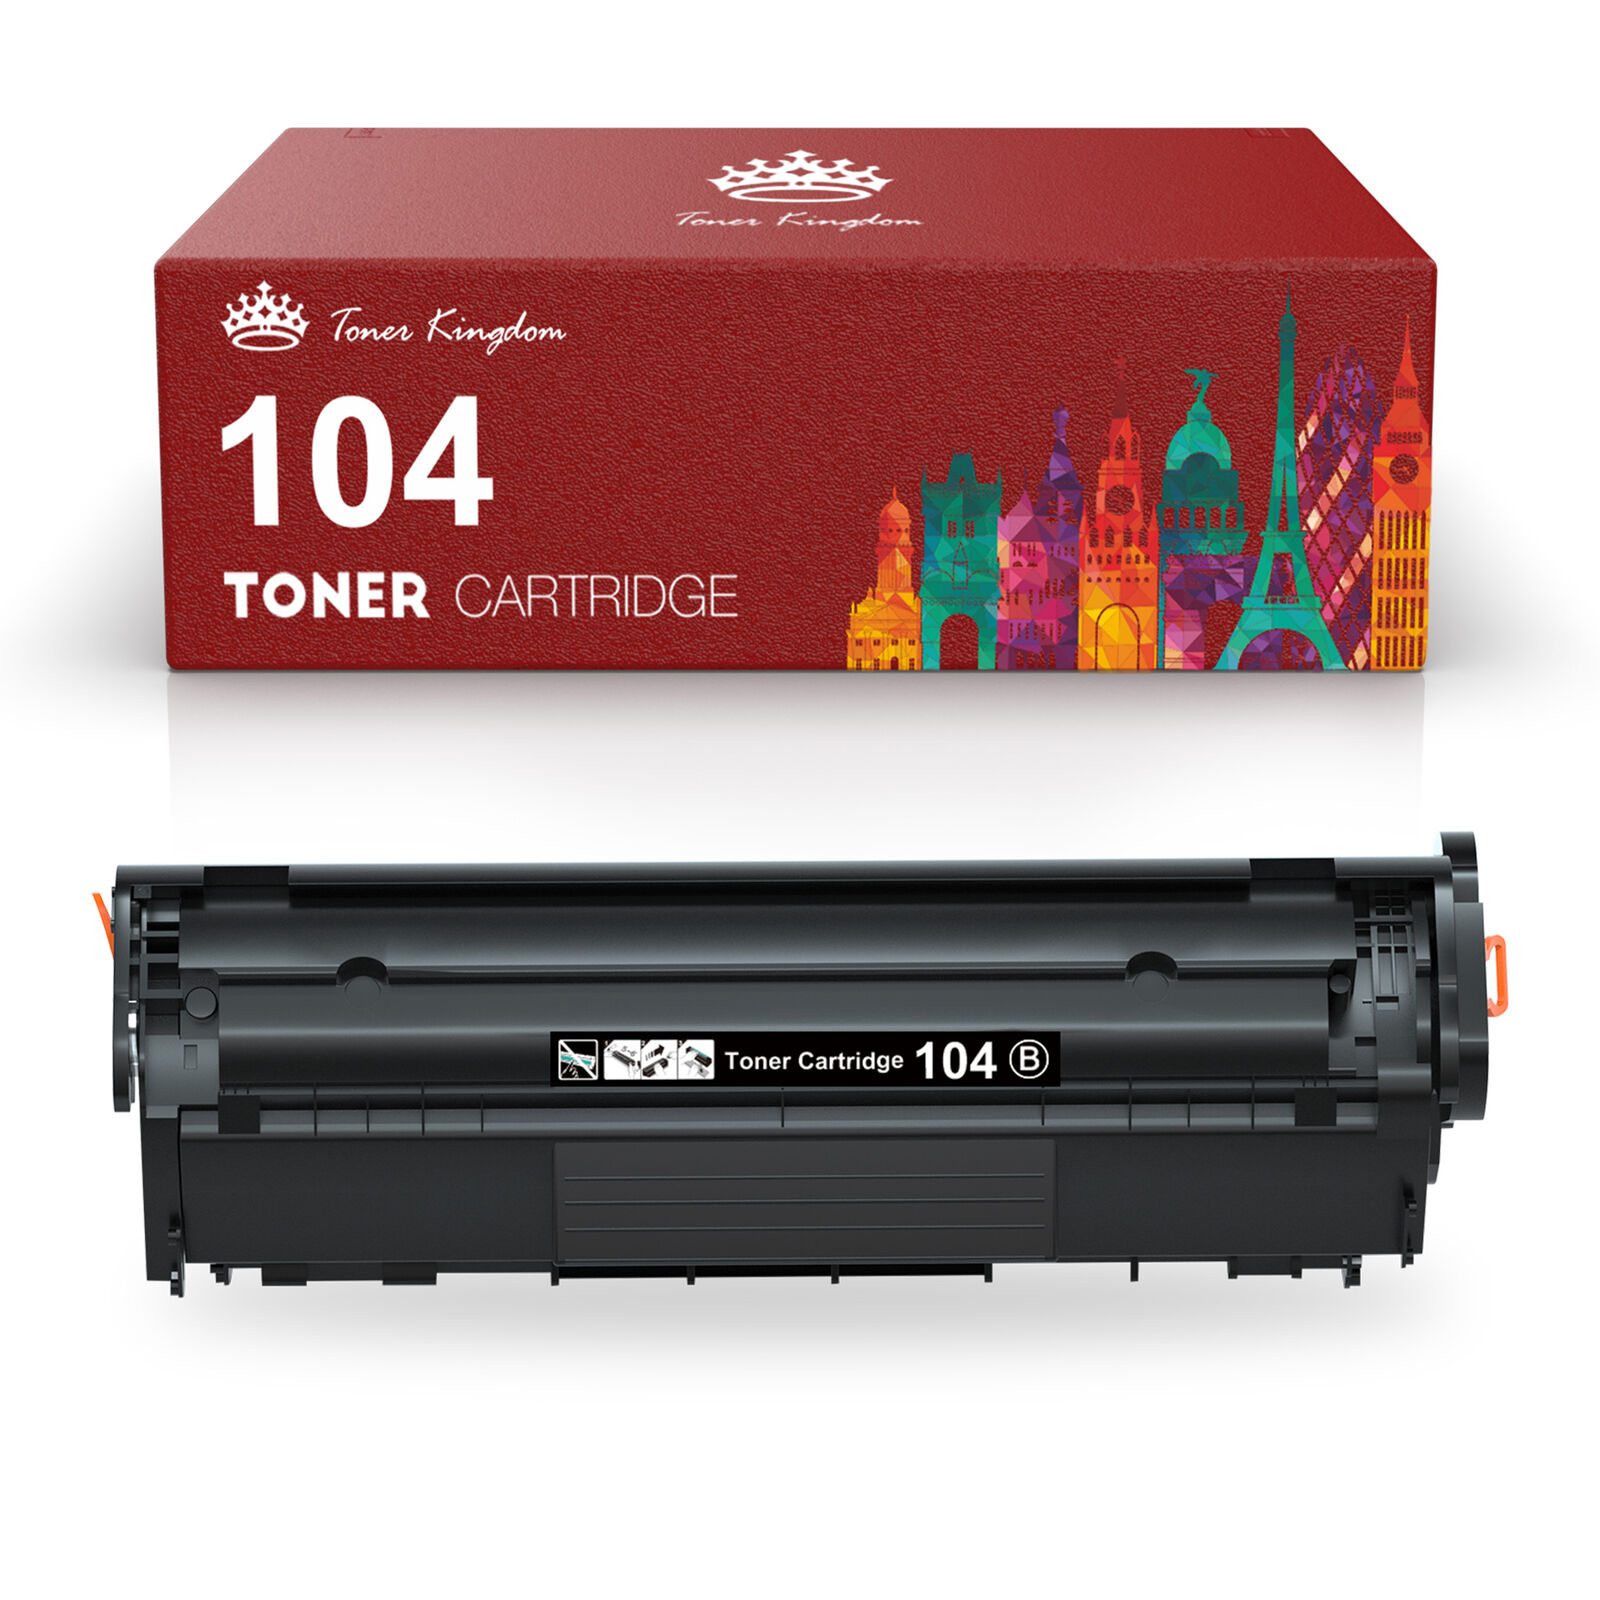 Laser Toner Cartridge For Canon 104 FX10 ImageClass MF4350D MF4150 D420 D480 lot